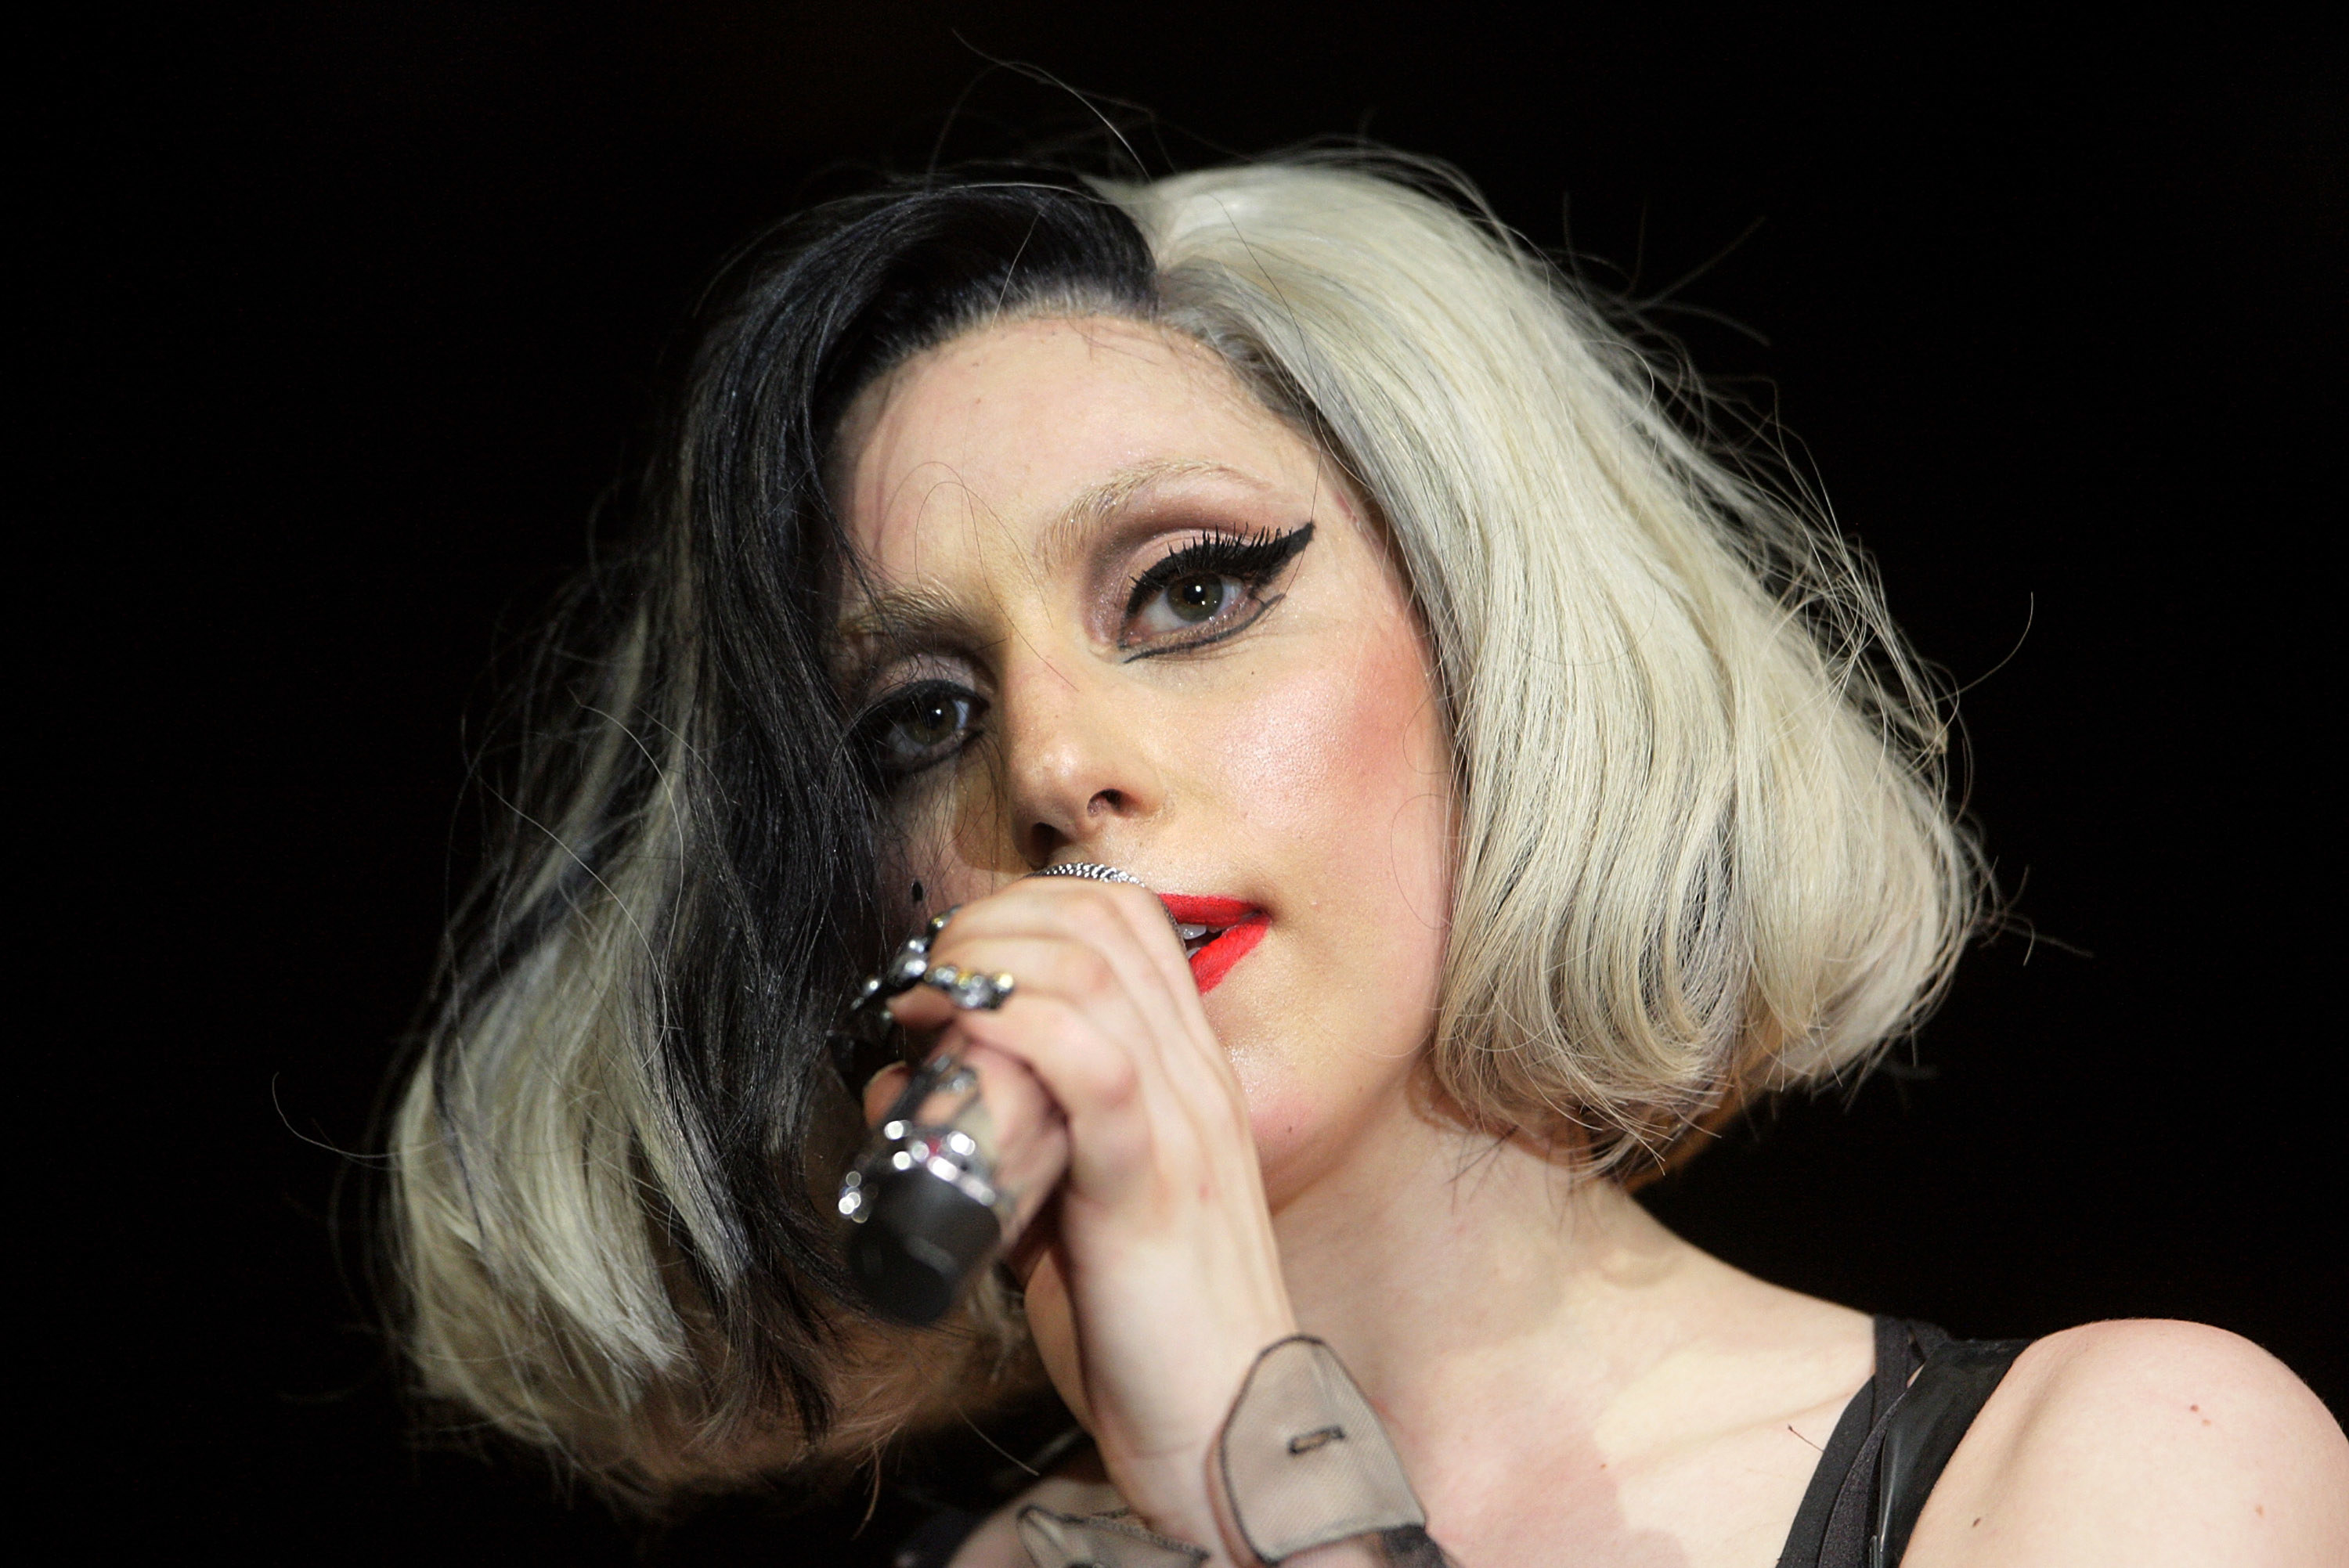 Lady Gaga performs on stage with heavy black eye makeup, her hair is half blonde and half black